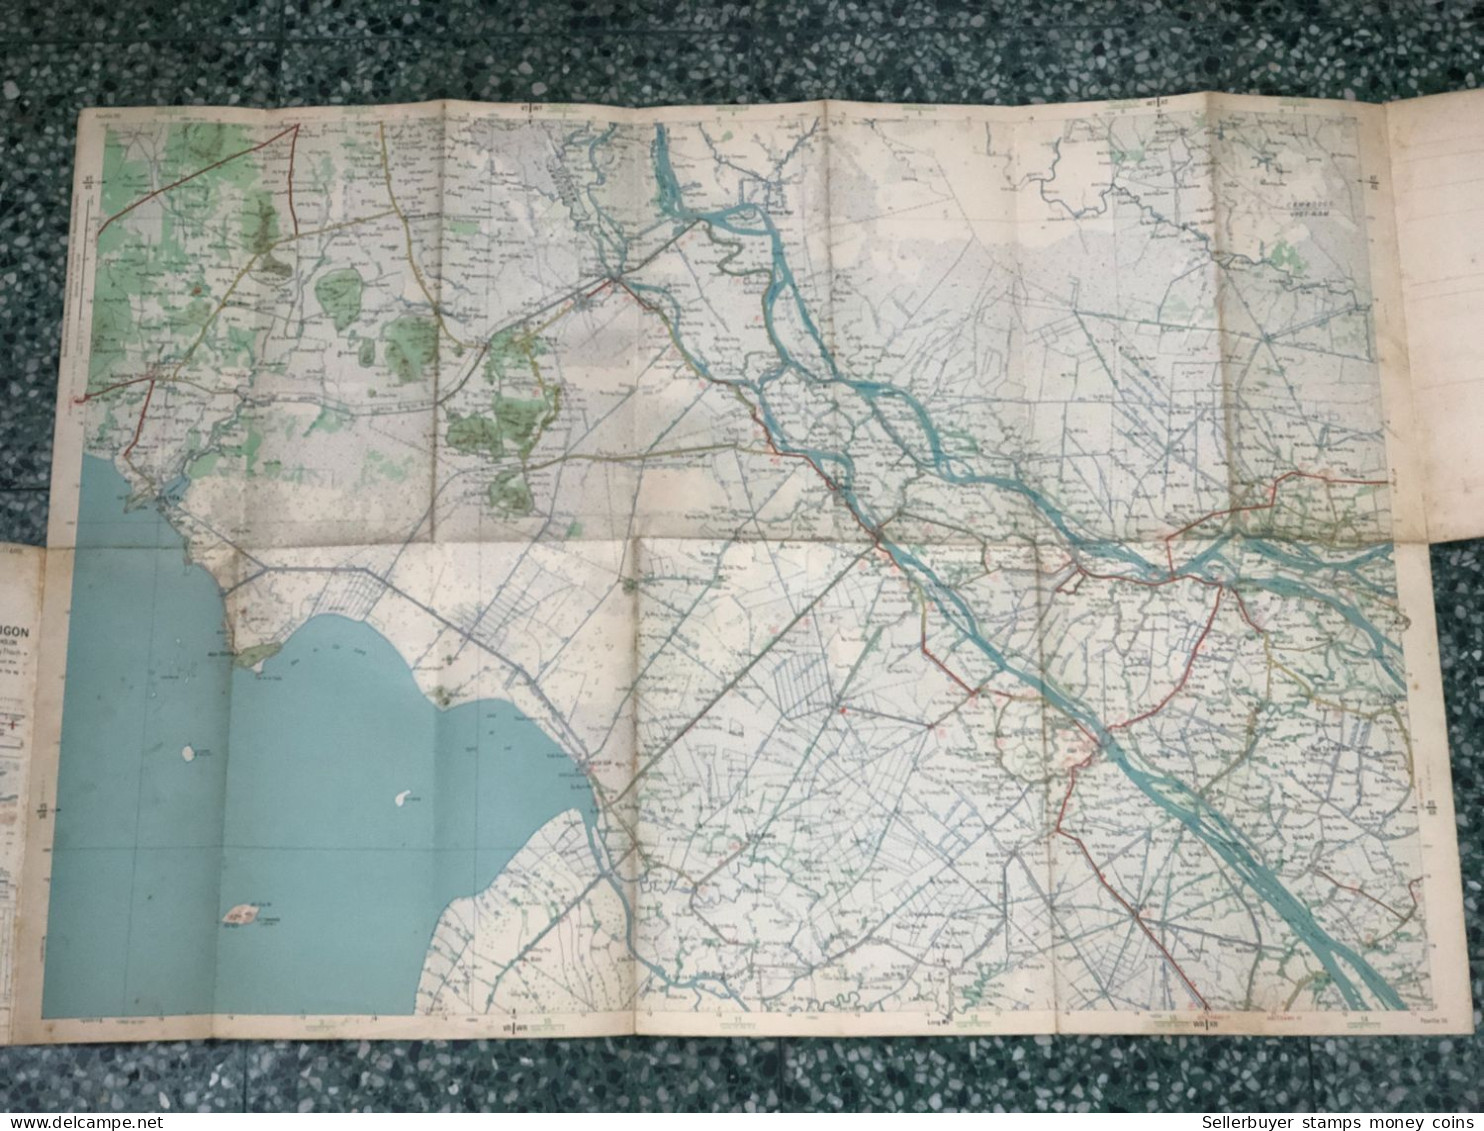 maps old-viet nam indo-china carte routiere de documentation militaire before 1961-1 pcs very rare